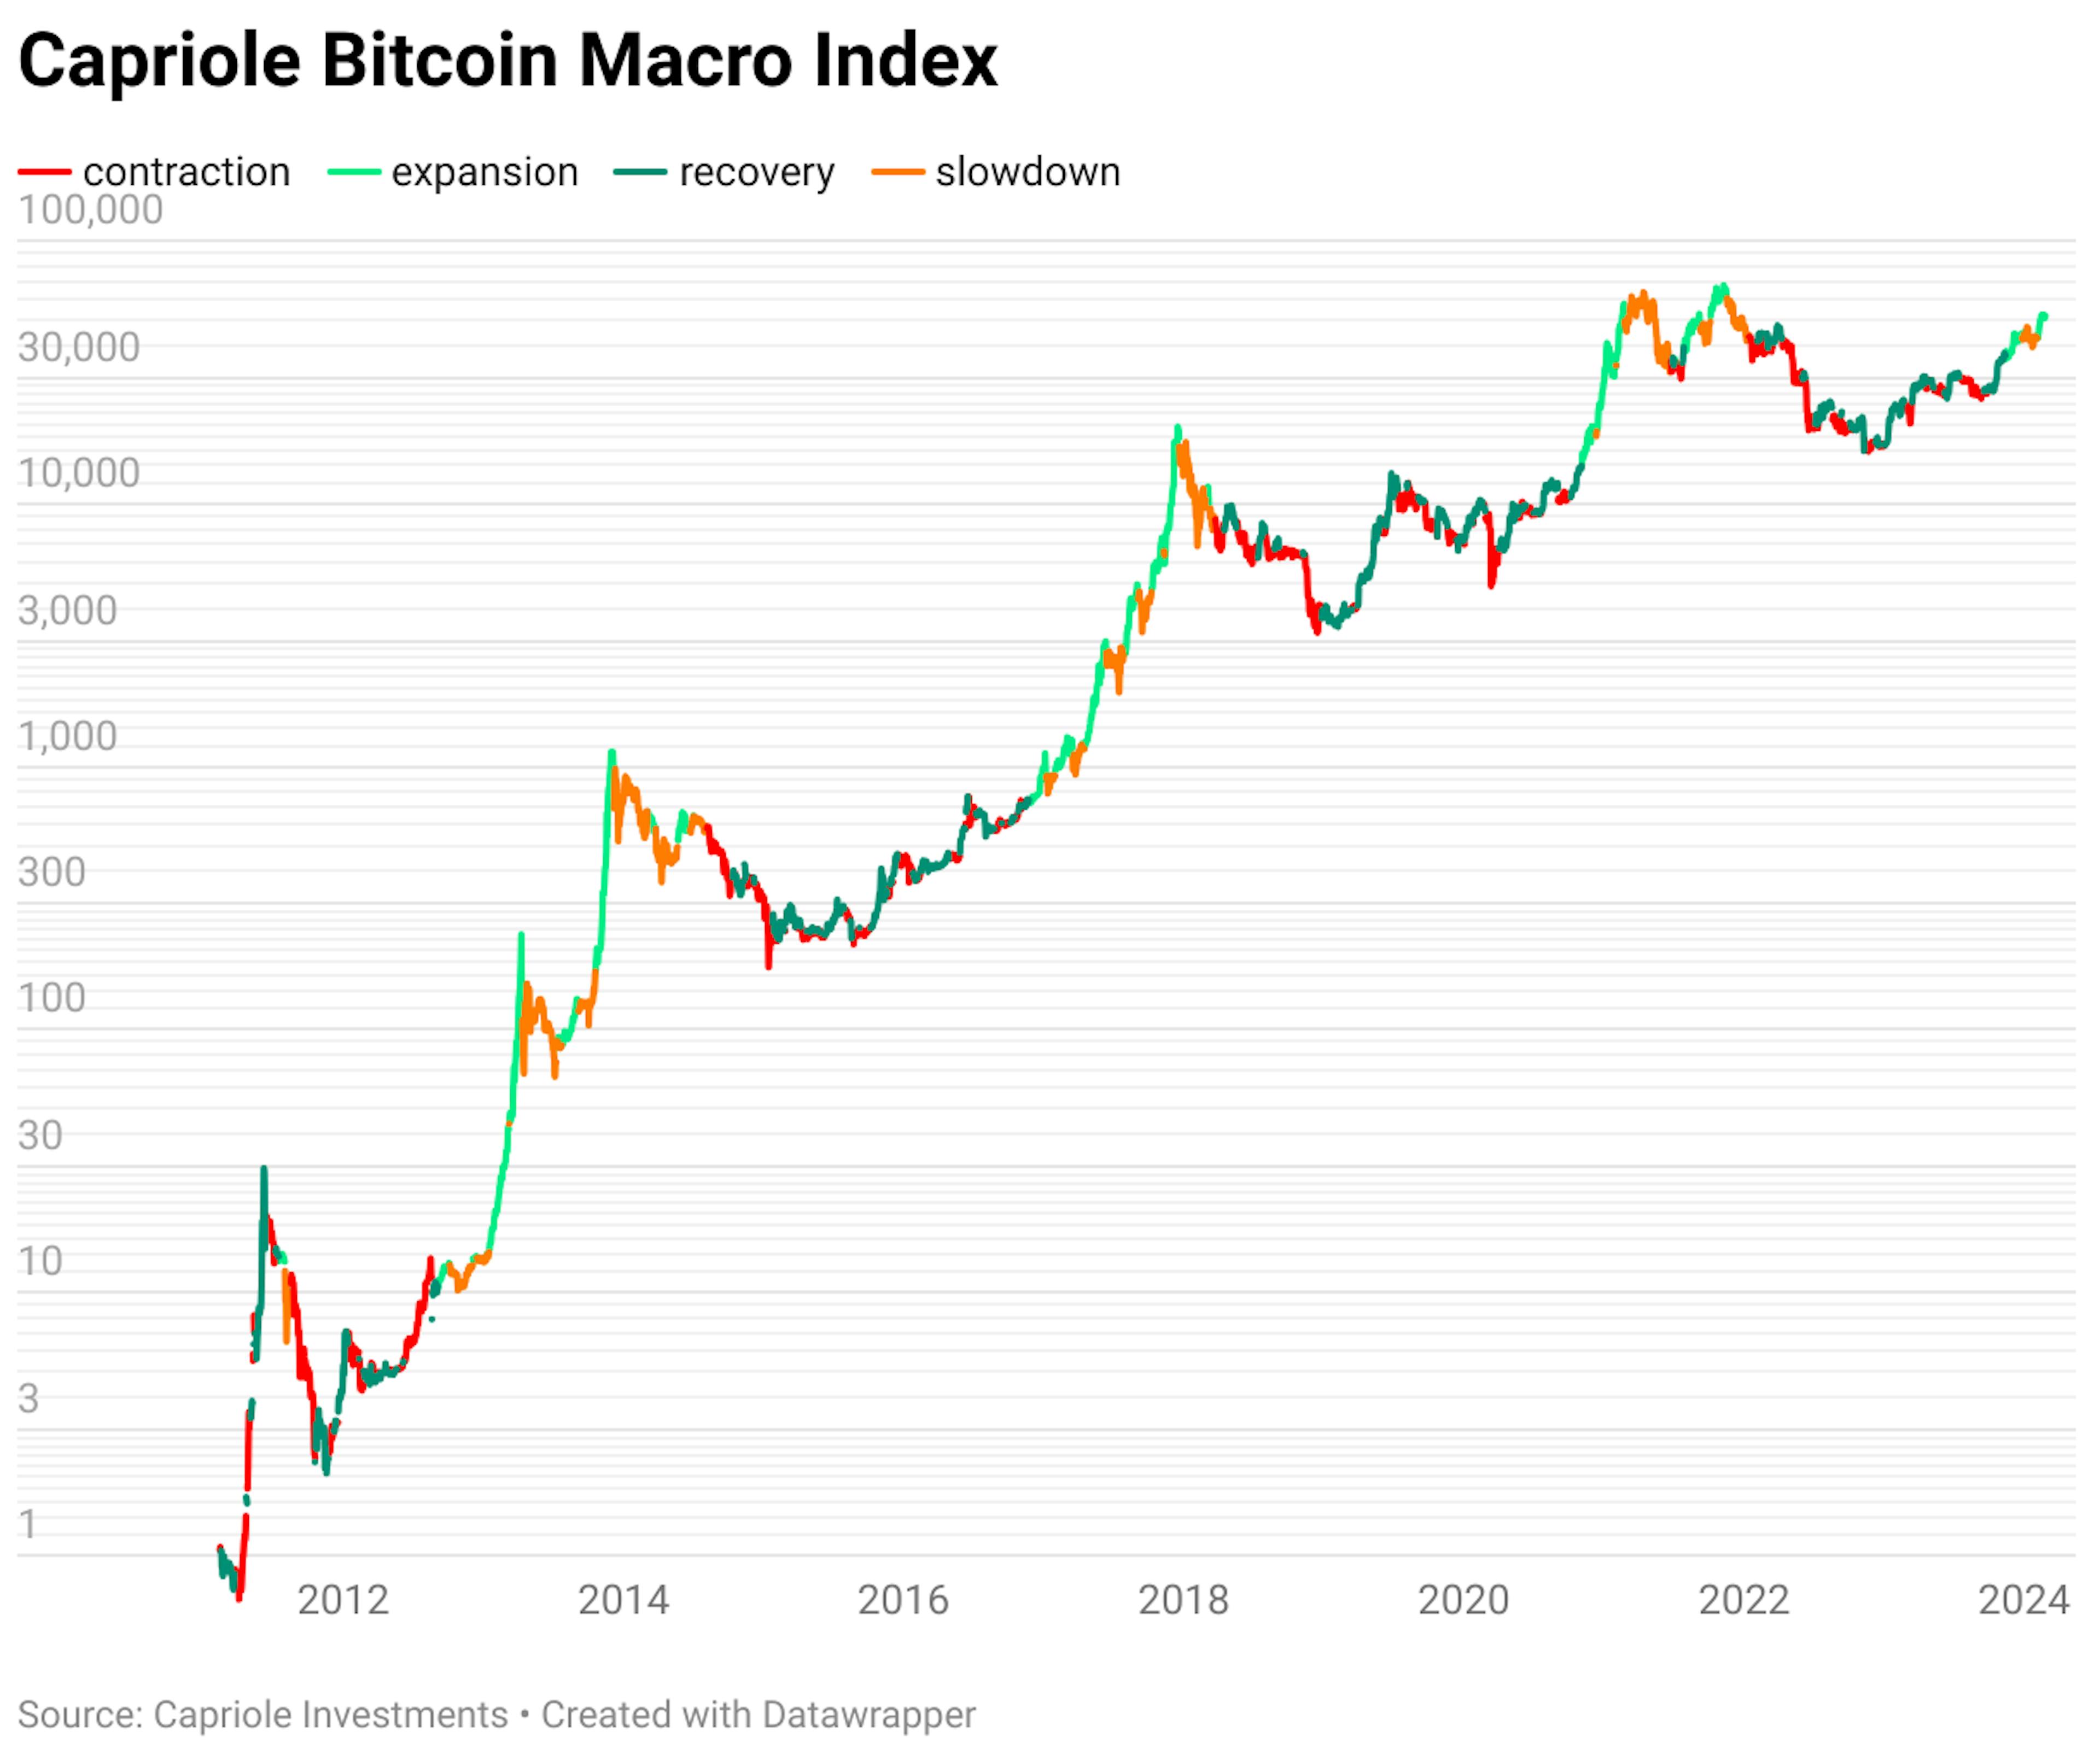 Capriole’s Bitcoin Macro Index